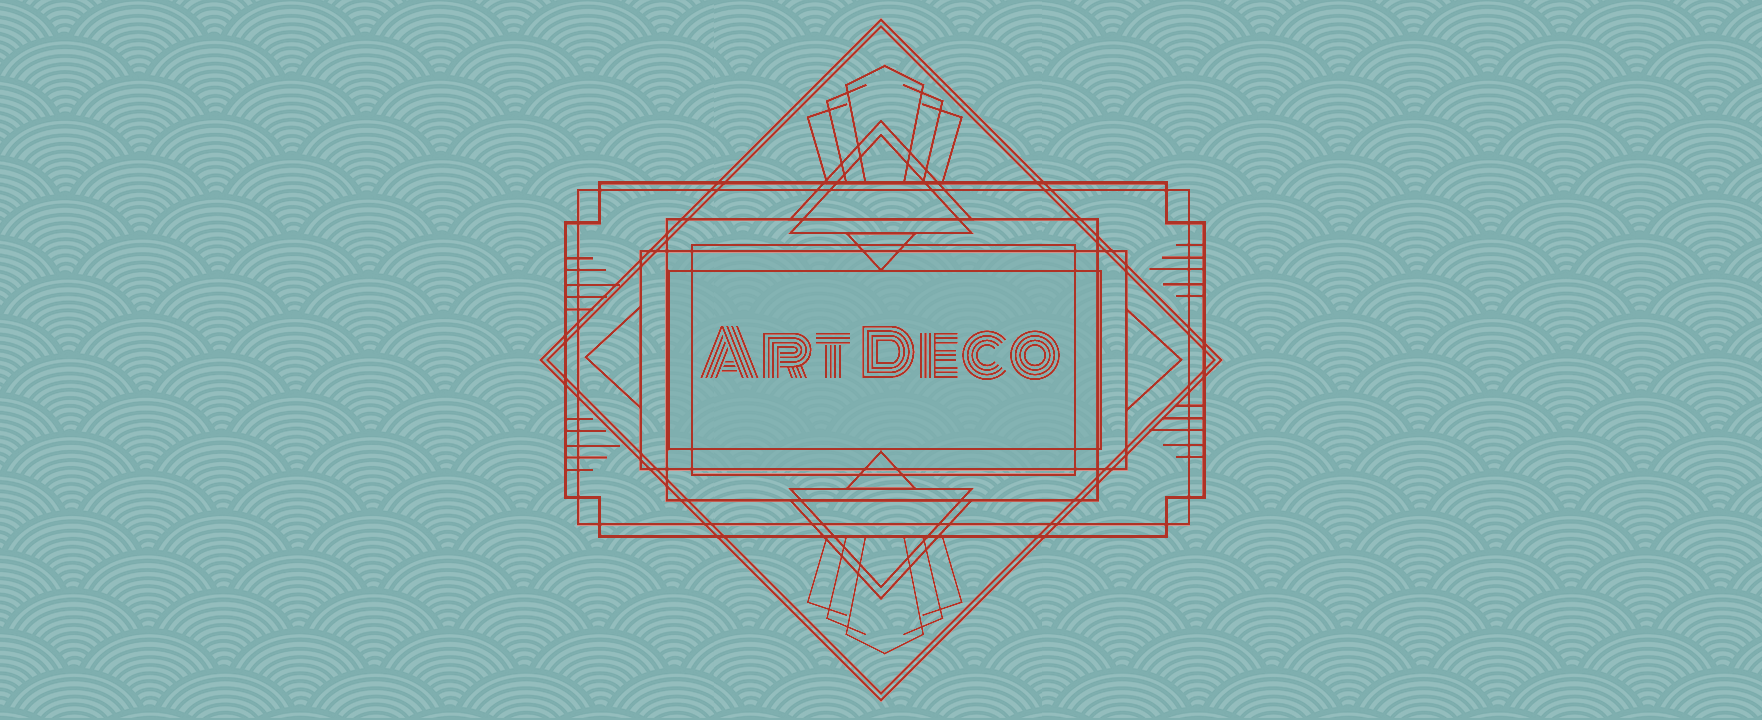 Art Deco Logo - Create an Art Deco-inspired Vector Logo in Gravit Designer